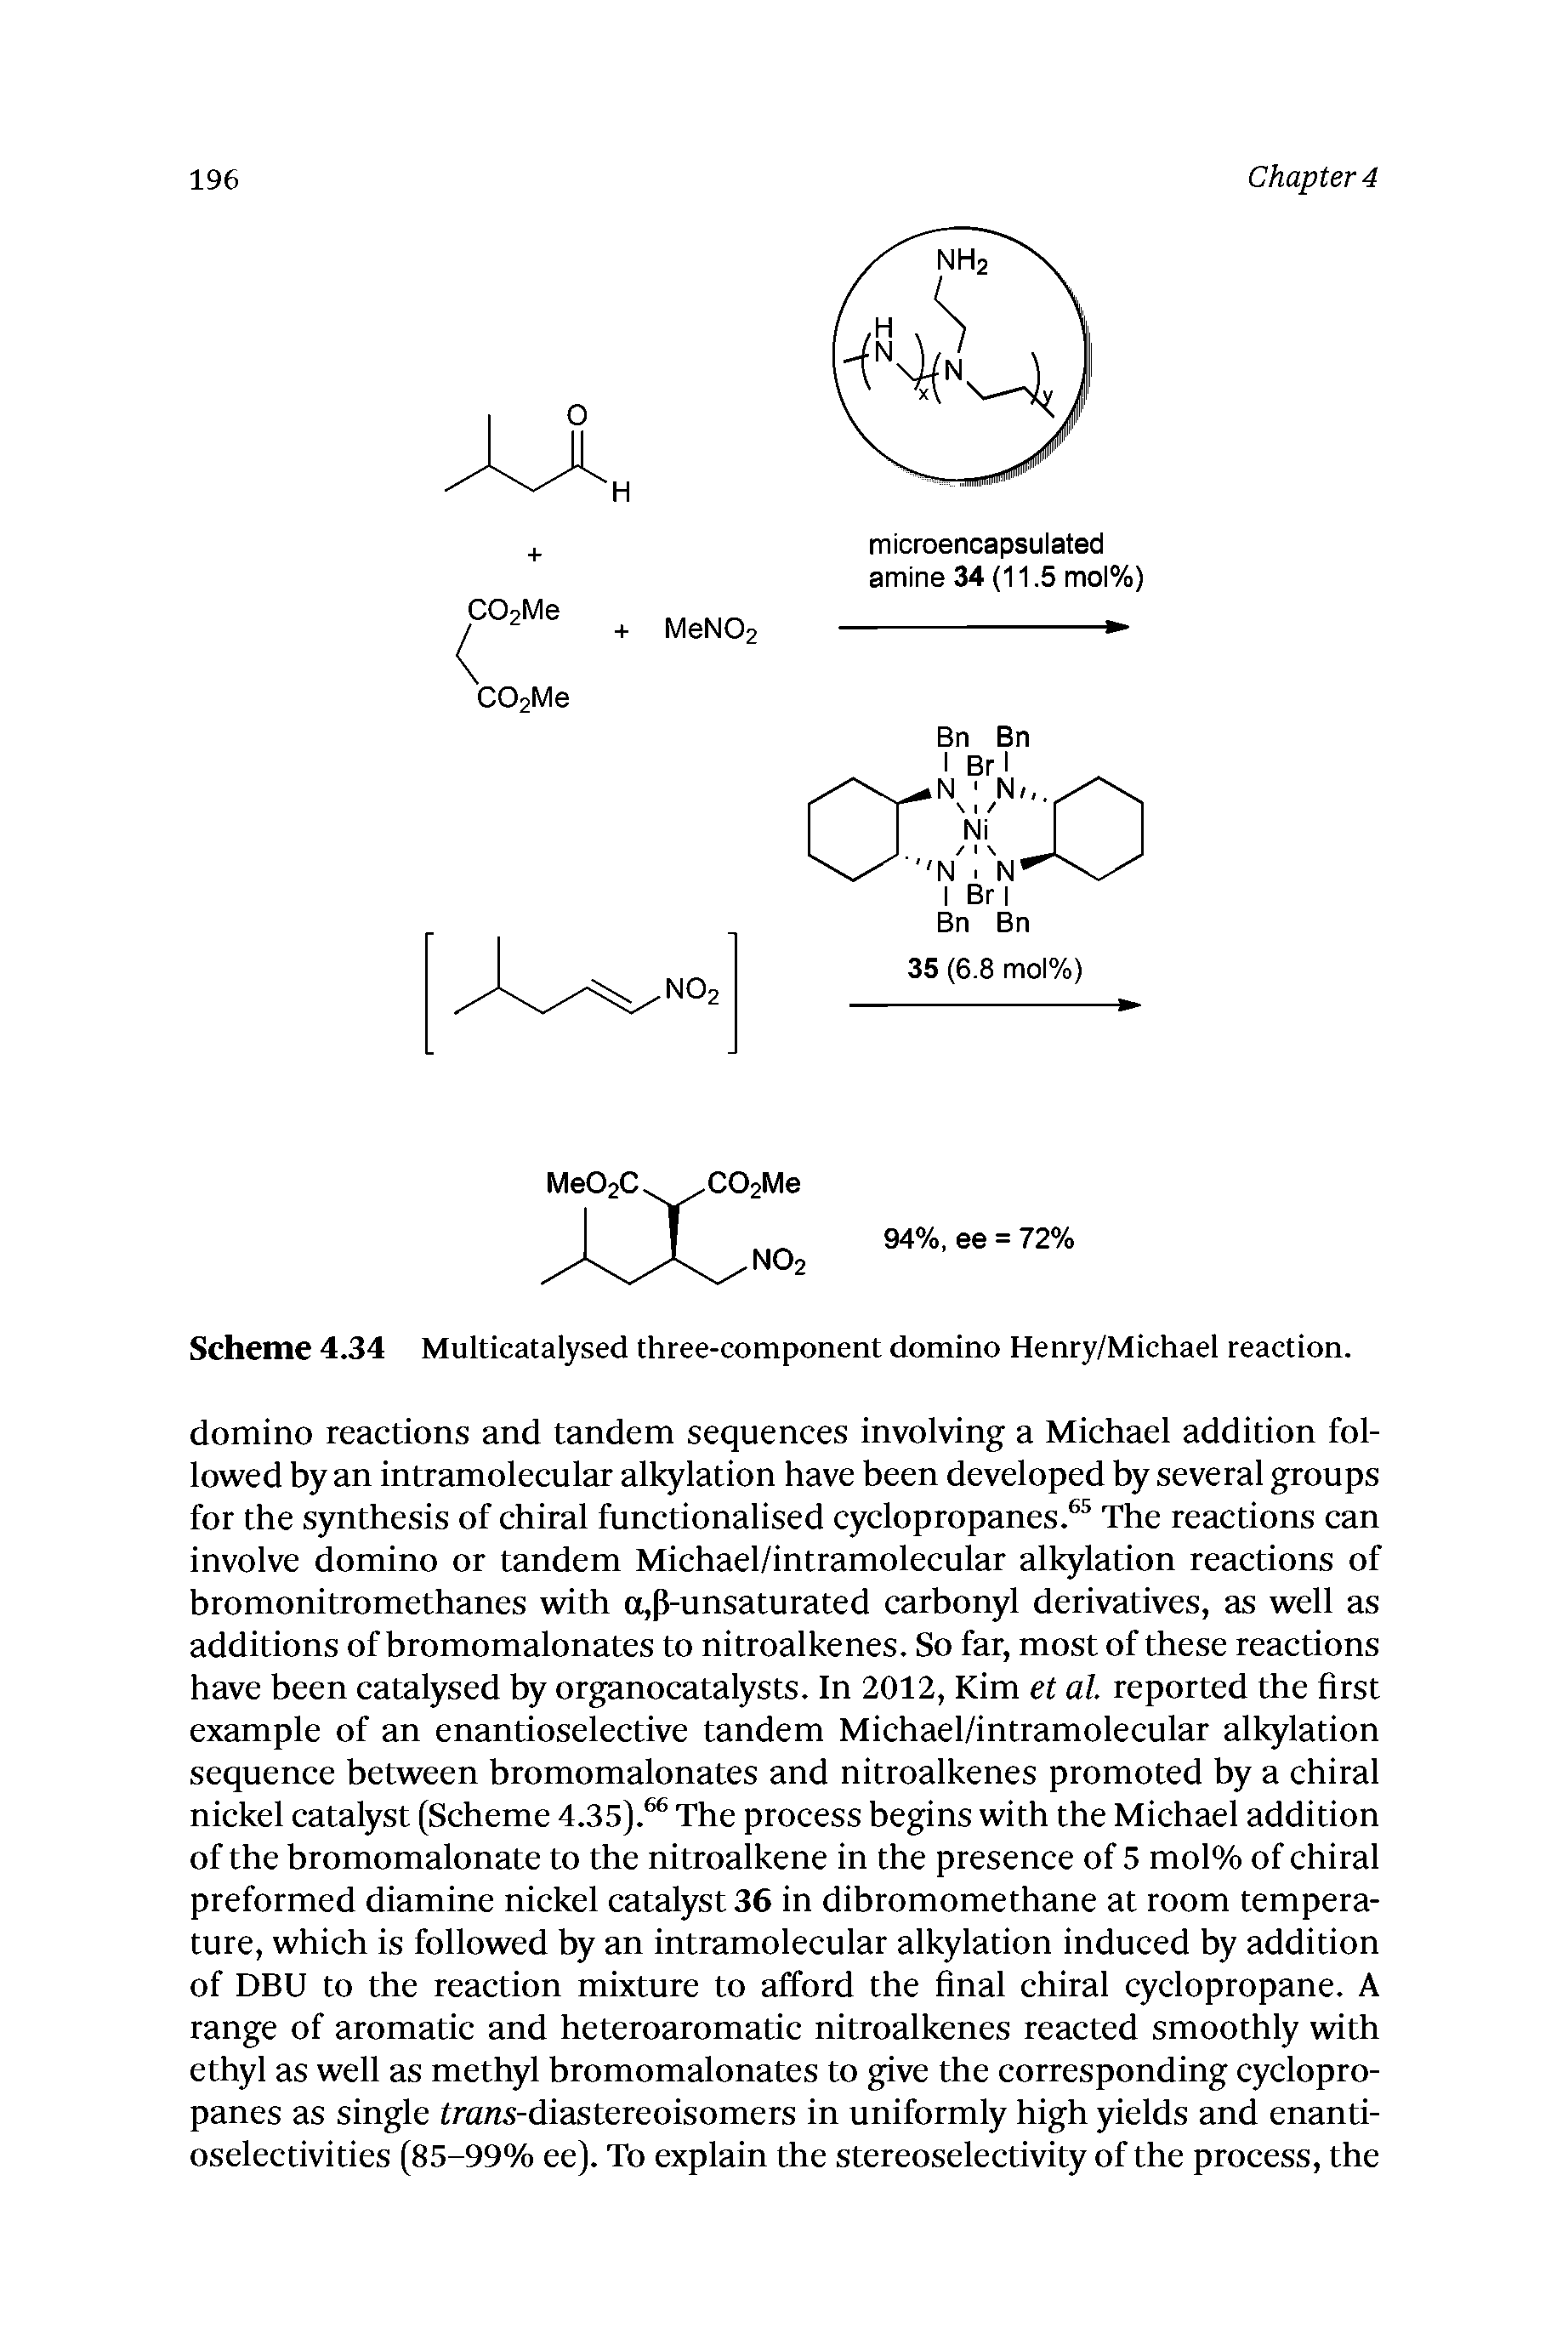 Scheme 4.34 Multicatalysed three-component domino Henry/Michael reaction.